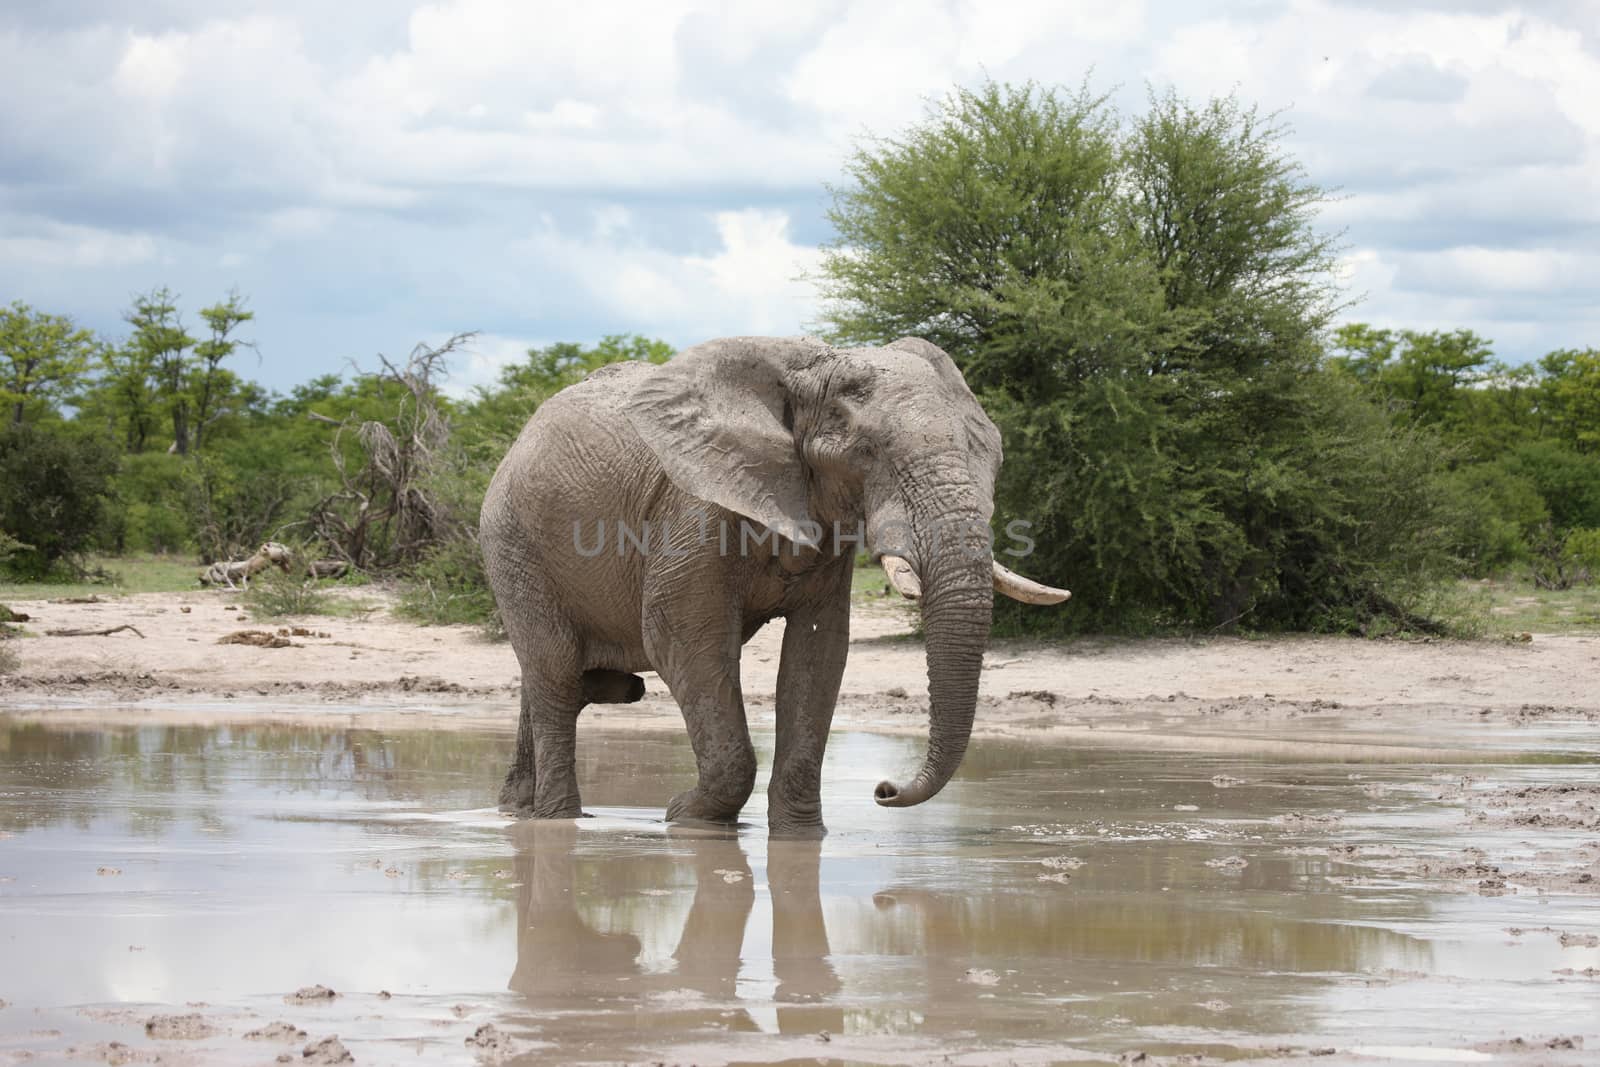 Wild Elephant (Elephantidae) in African Botswana savannah by desant7474